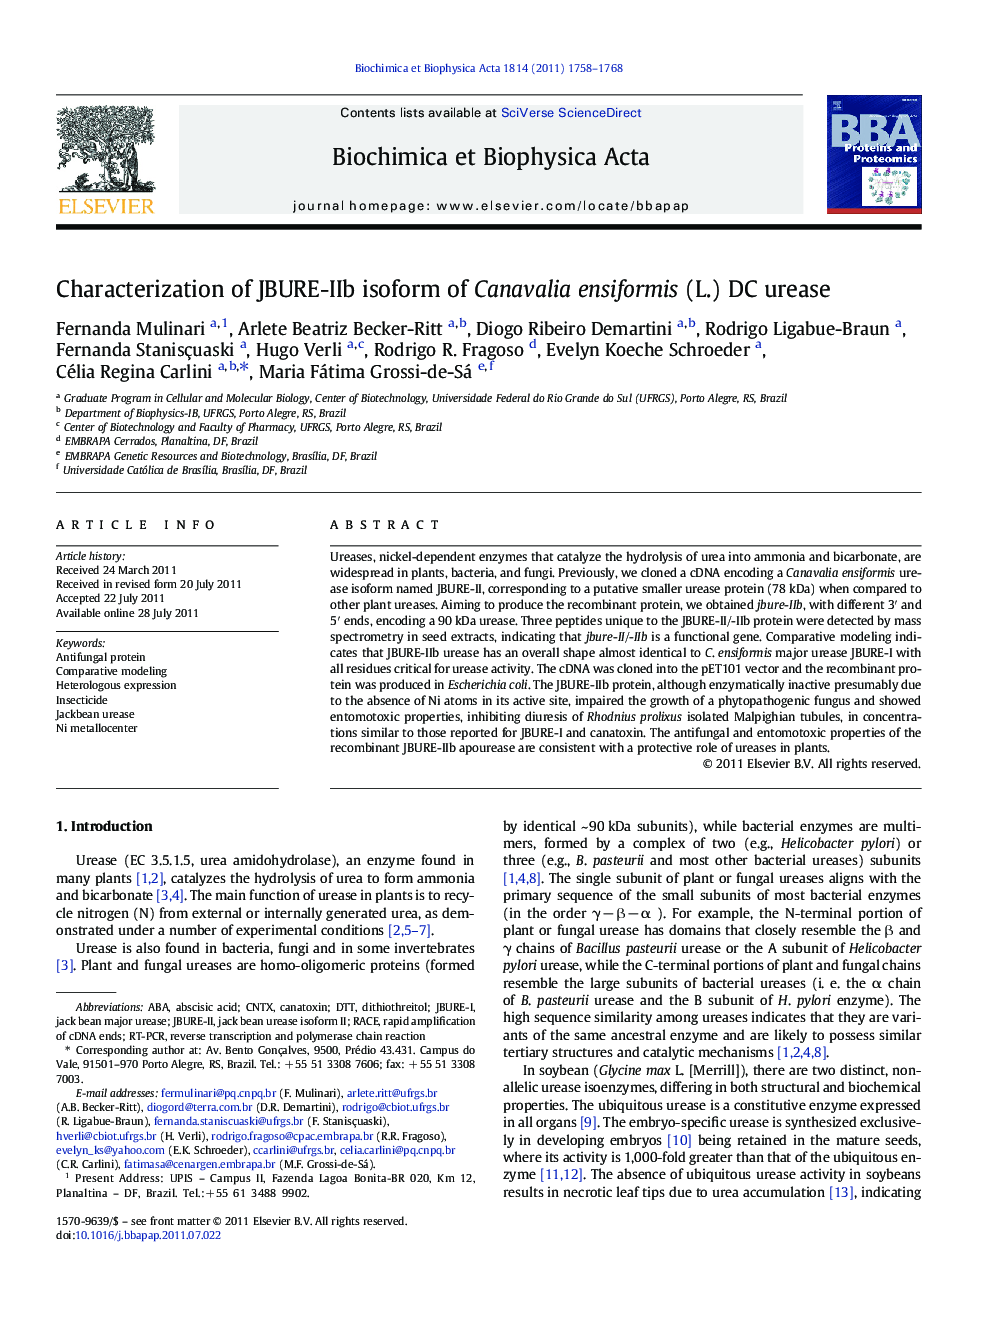 Characterization of JBURE-IIb isoform of Canavalia ensiformis (L.) DC urease